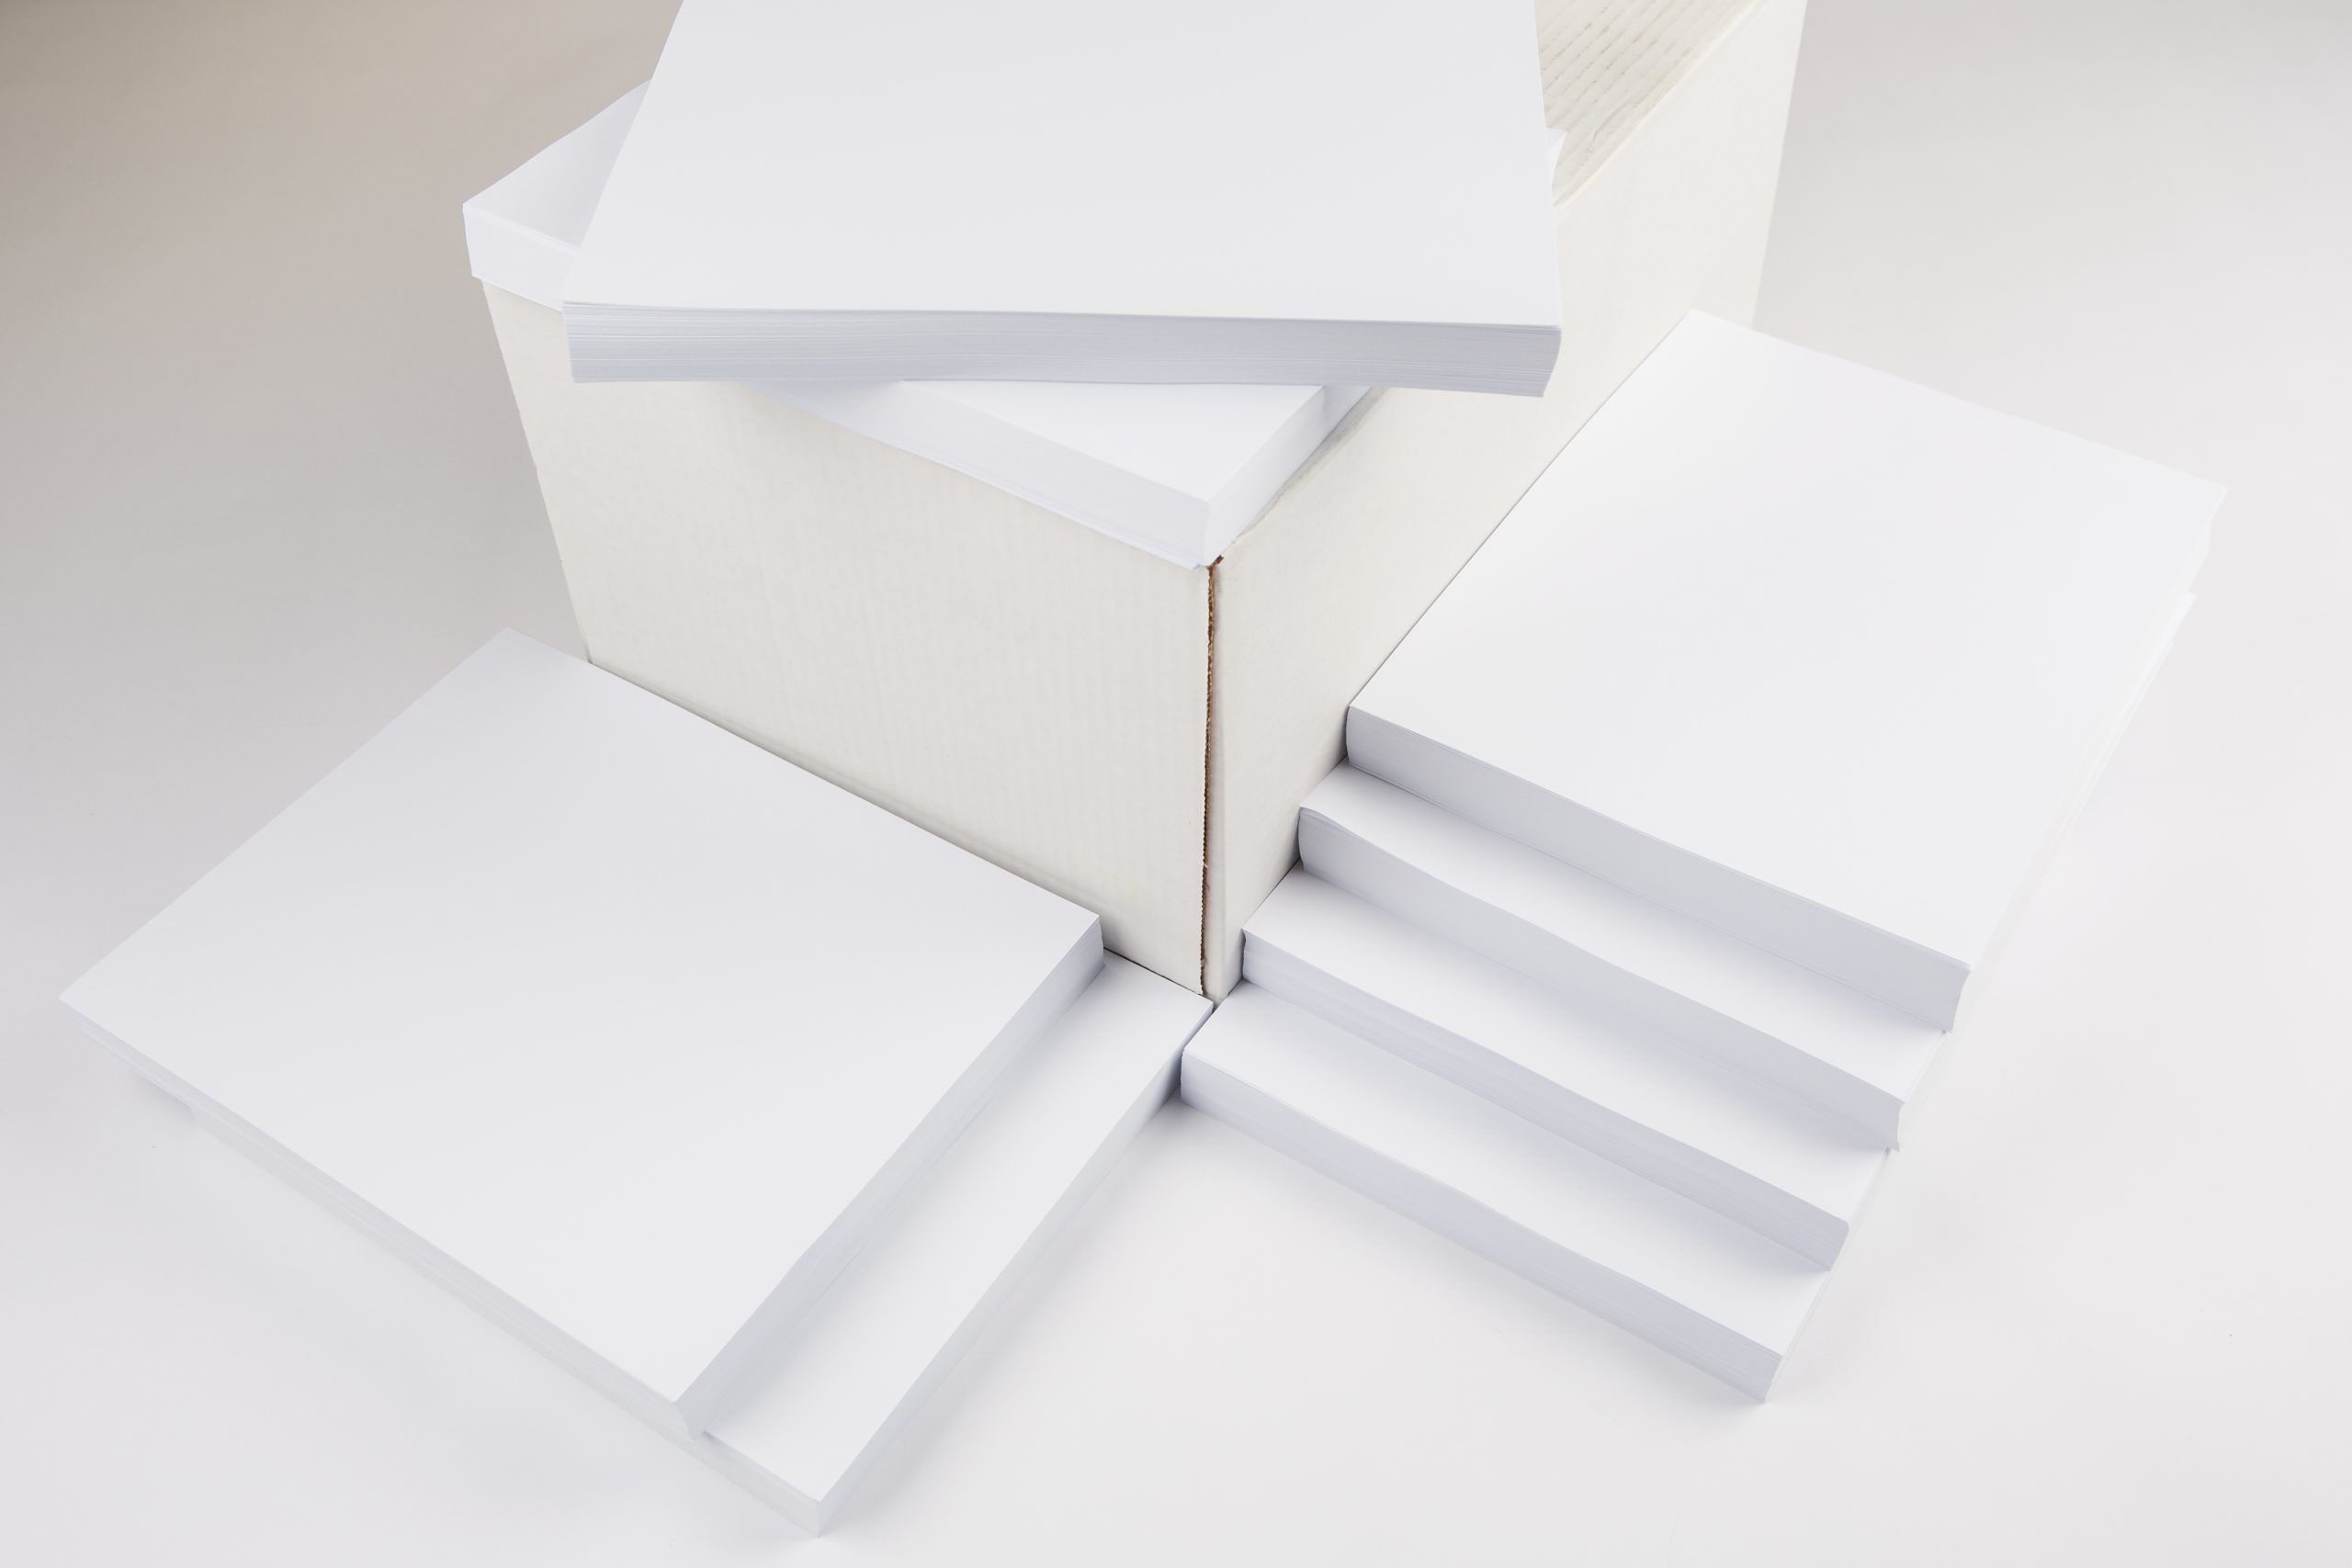 Us Letter Size Paper 8.5x11 Thermal Printer Paper Multipurpose